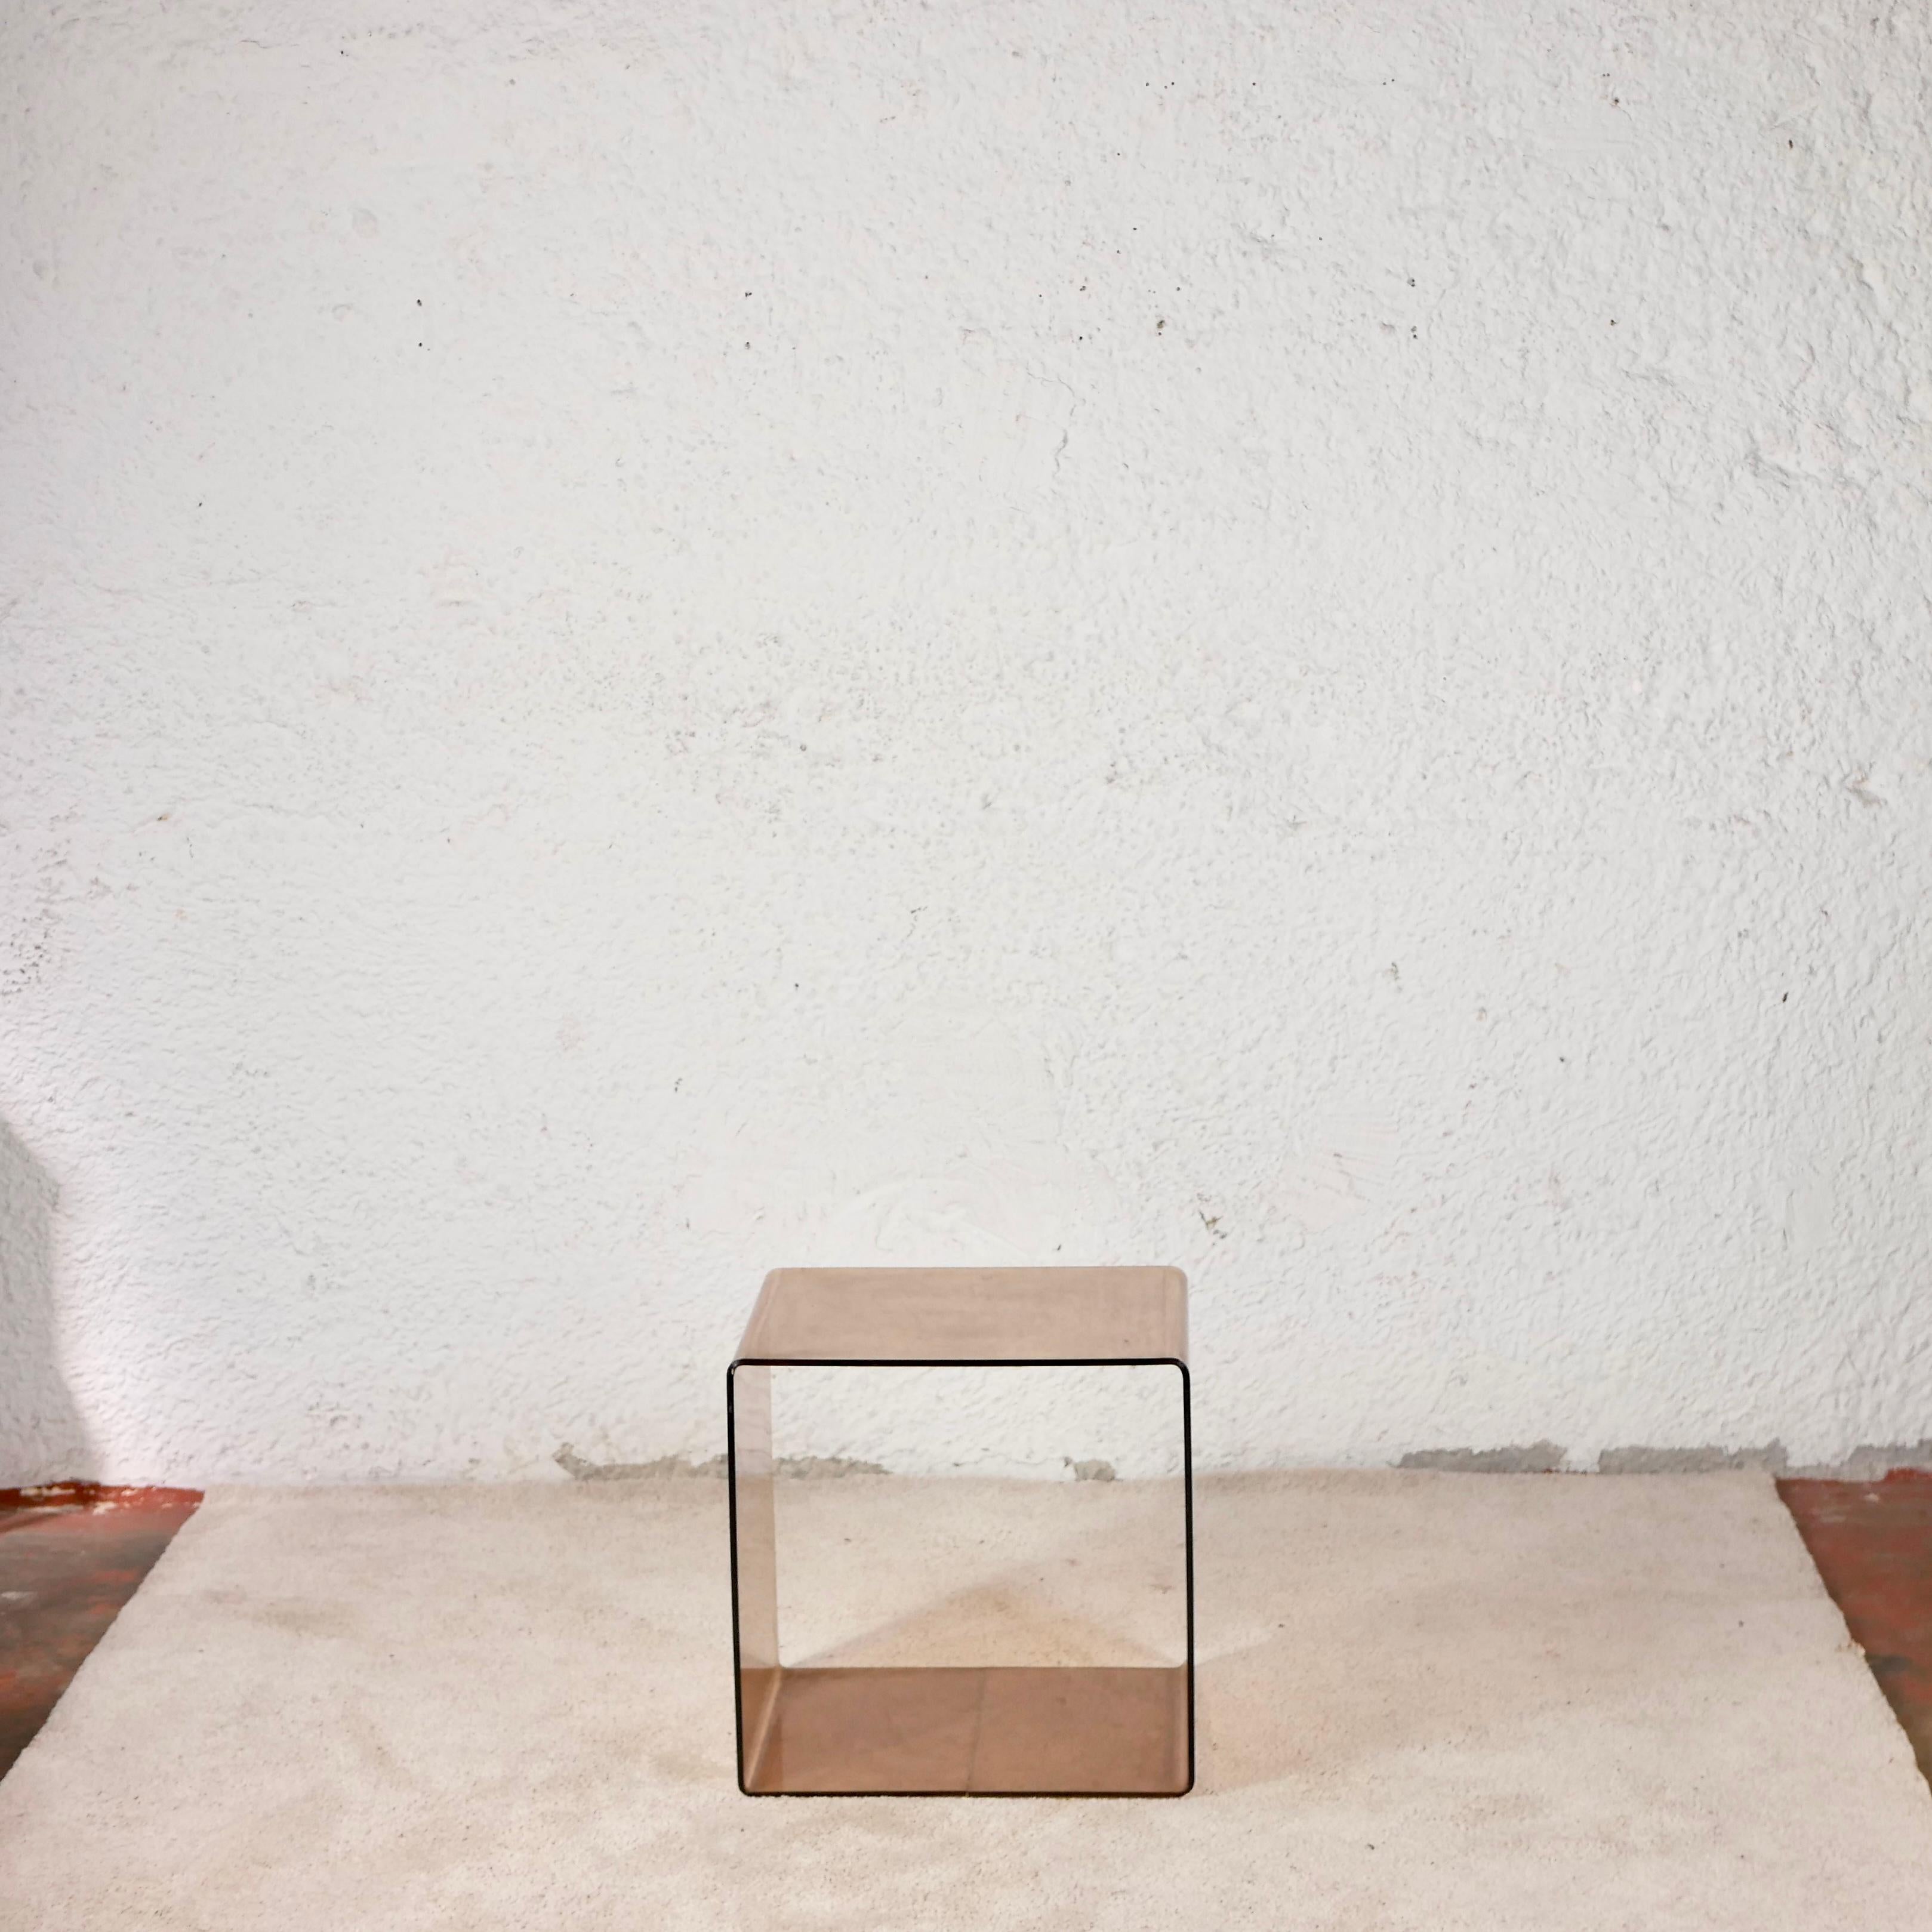 French Set of 4 plexiglass cubes by Michel Dumas for Roche Bobois, France, 1970s